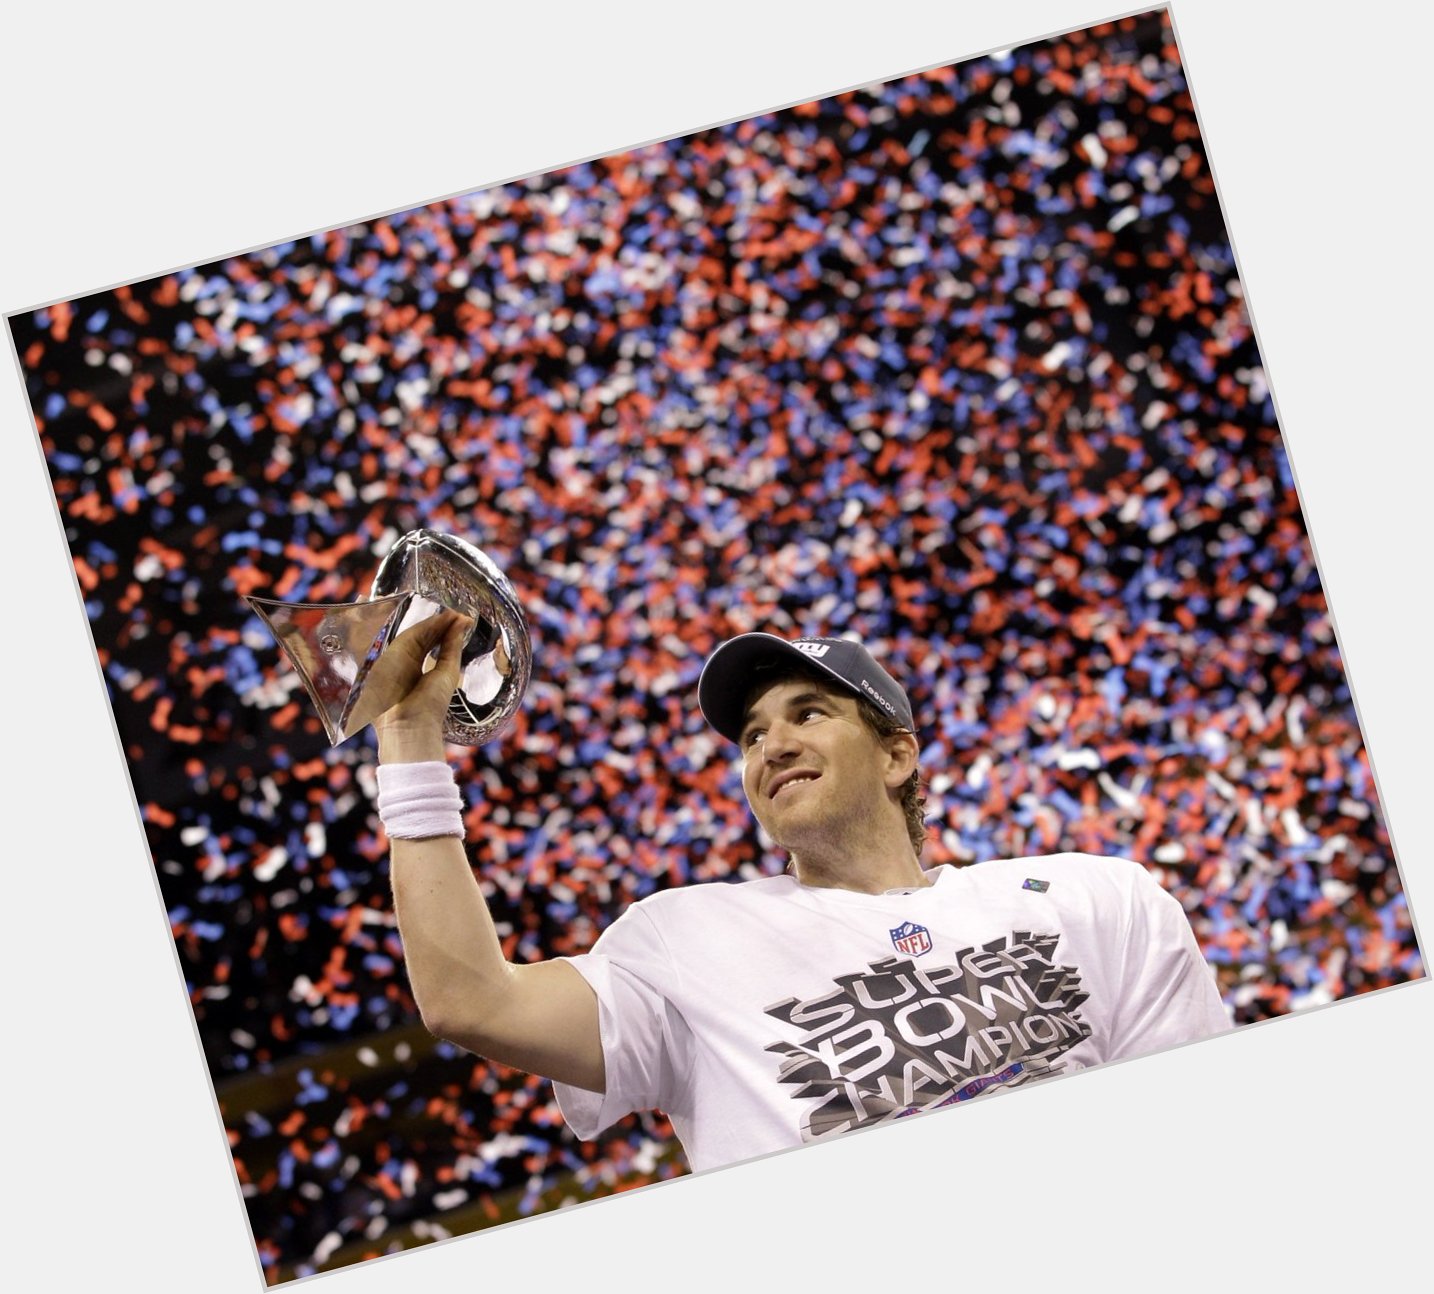  108 career wins 2x Super Bowl MVP

Happy Birthday Eli Manning! 